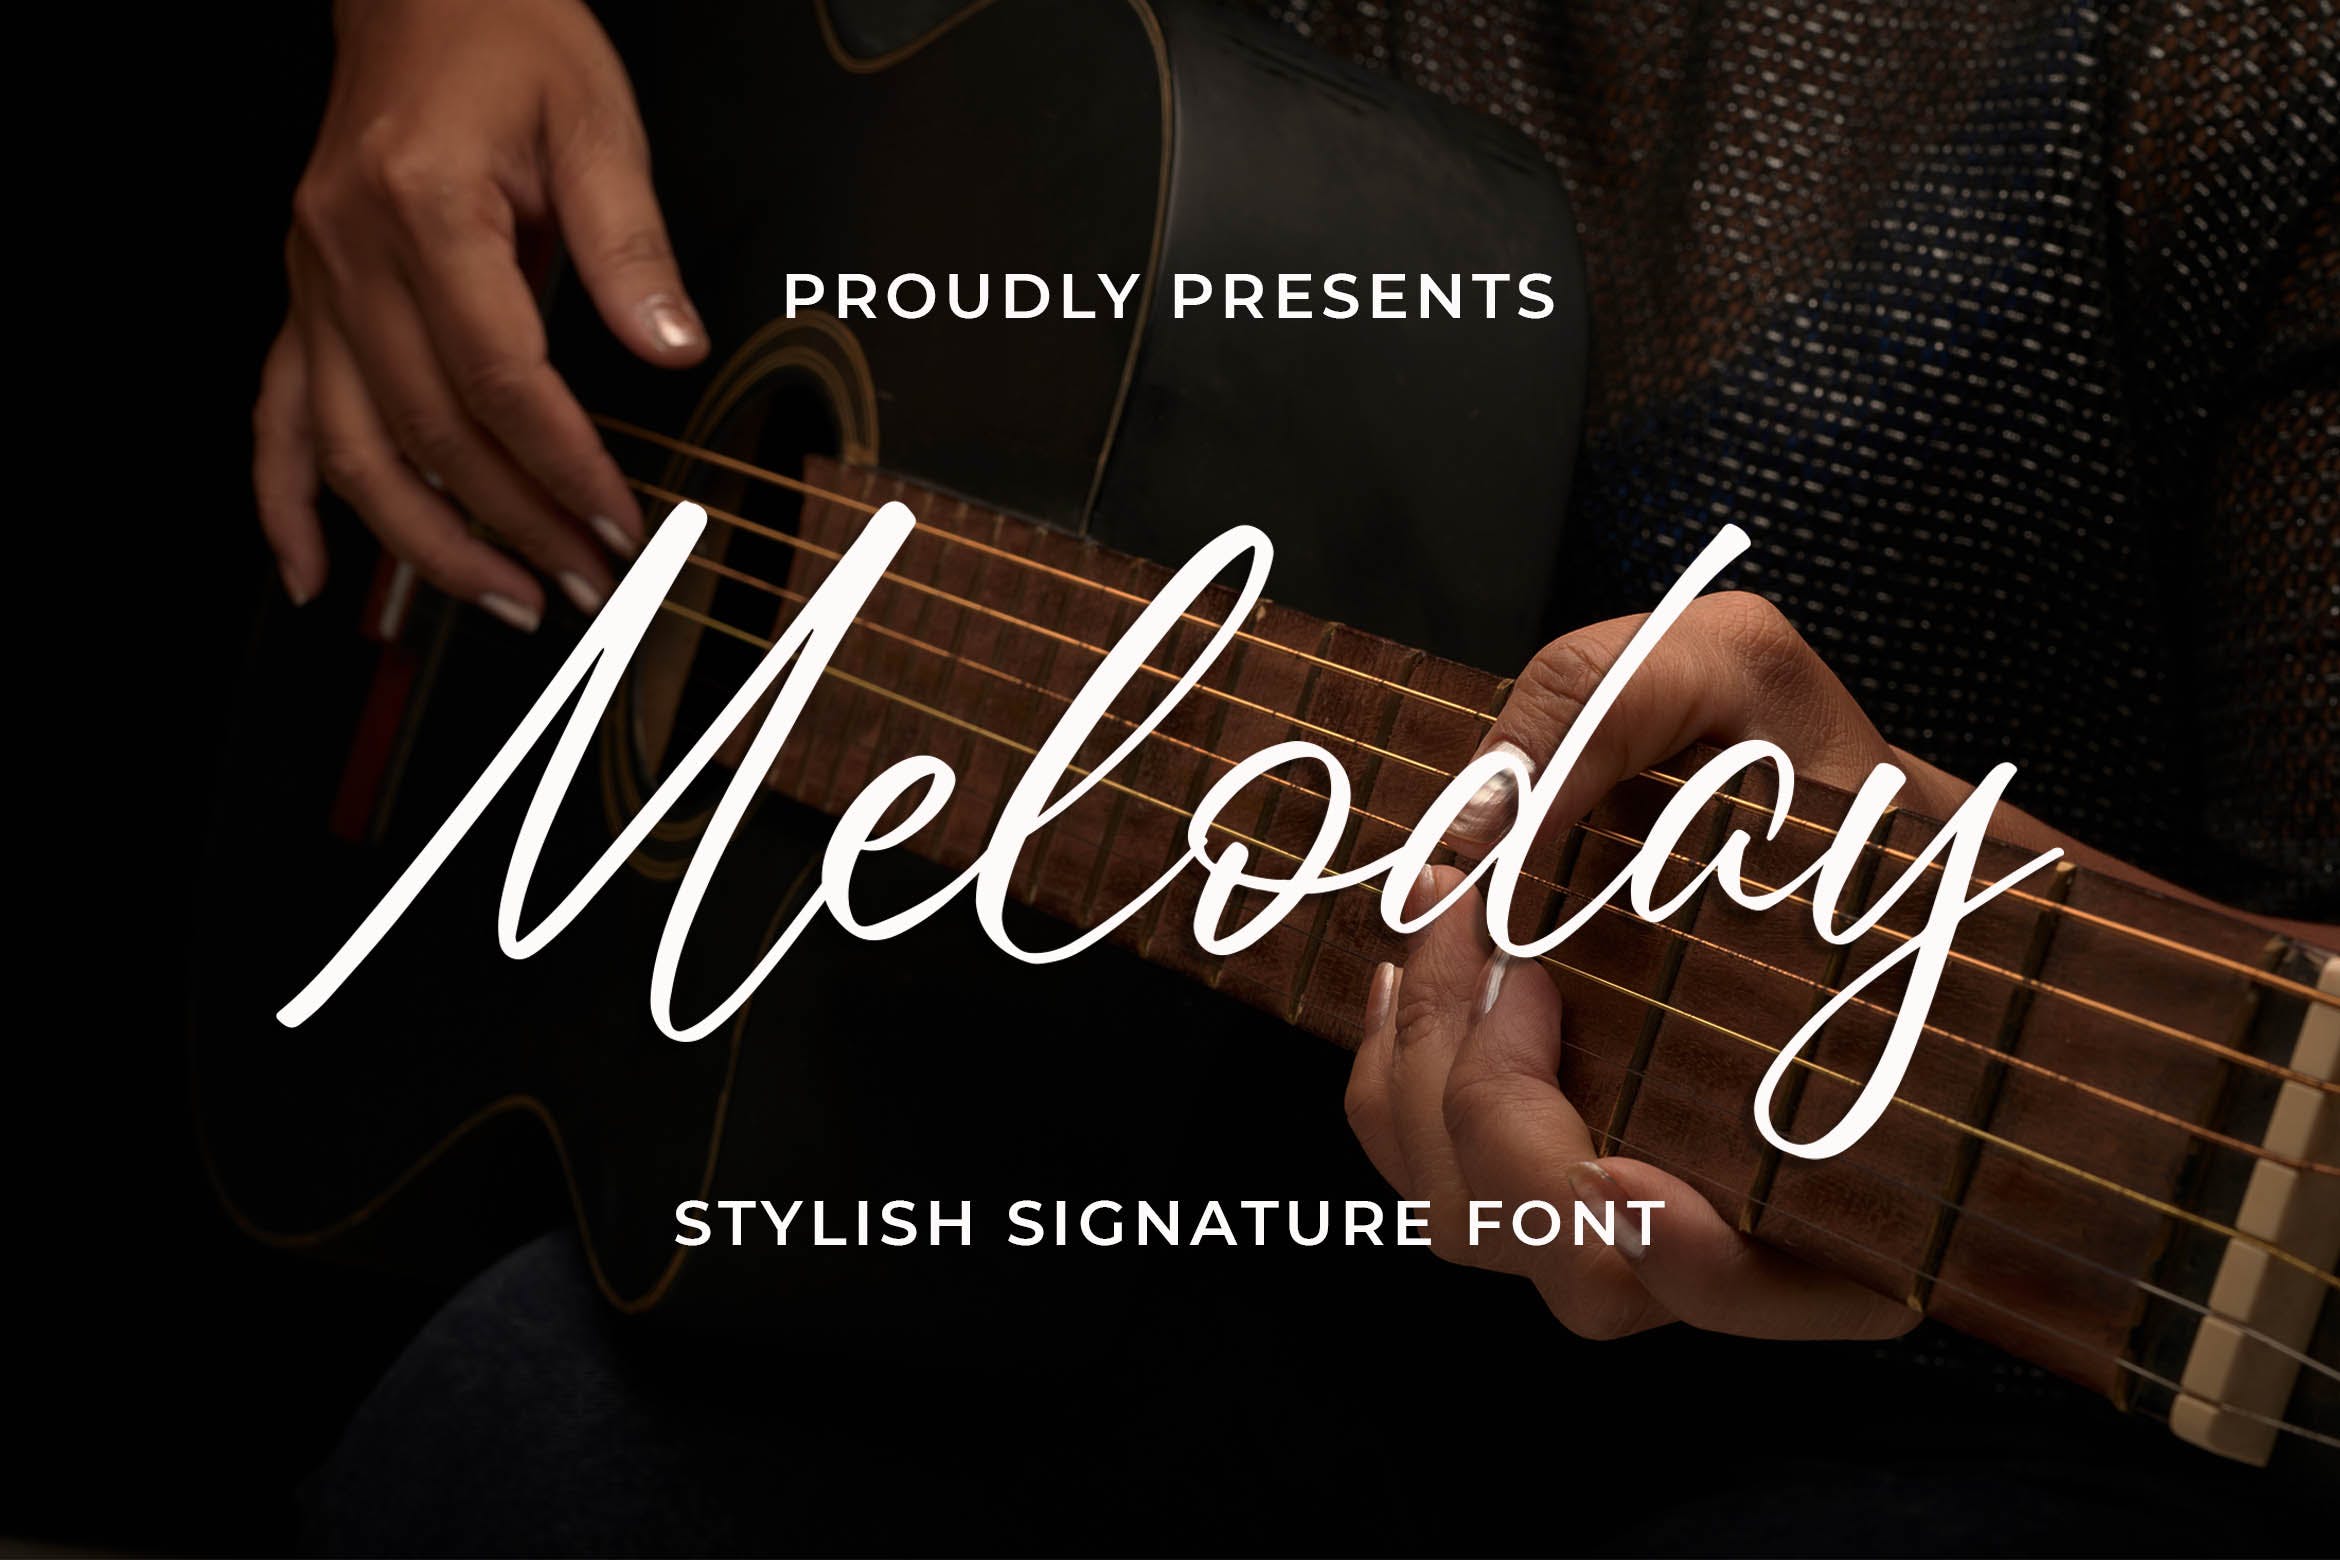 英文时尚签名手写字体非凡图库精选 Meloday – Stylish Signature Font插图